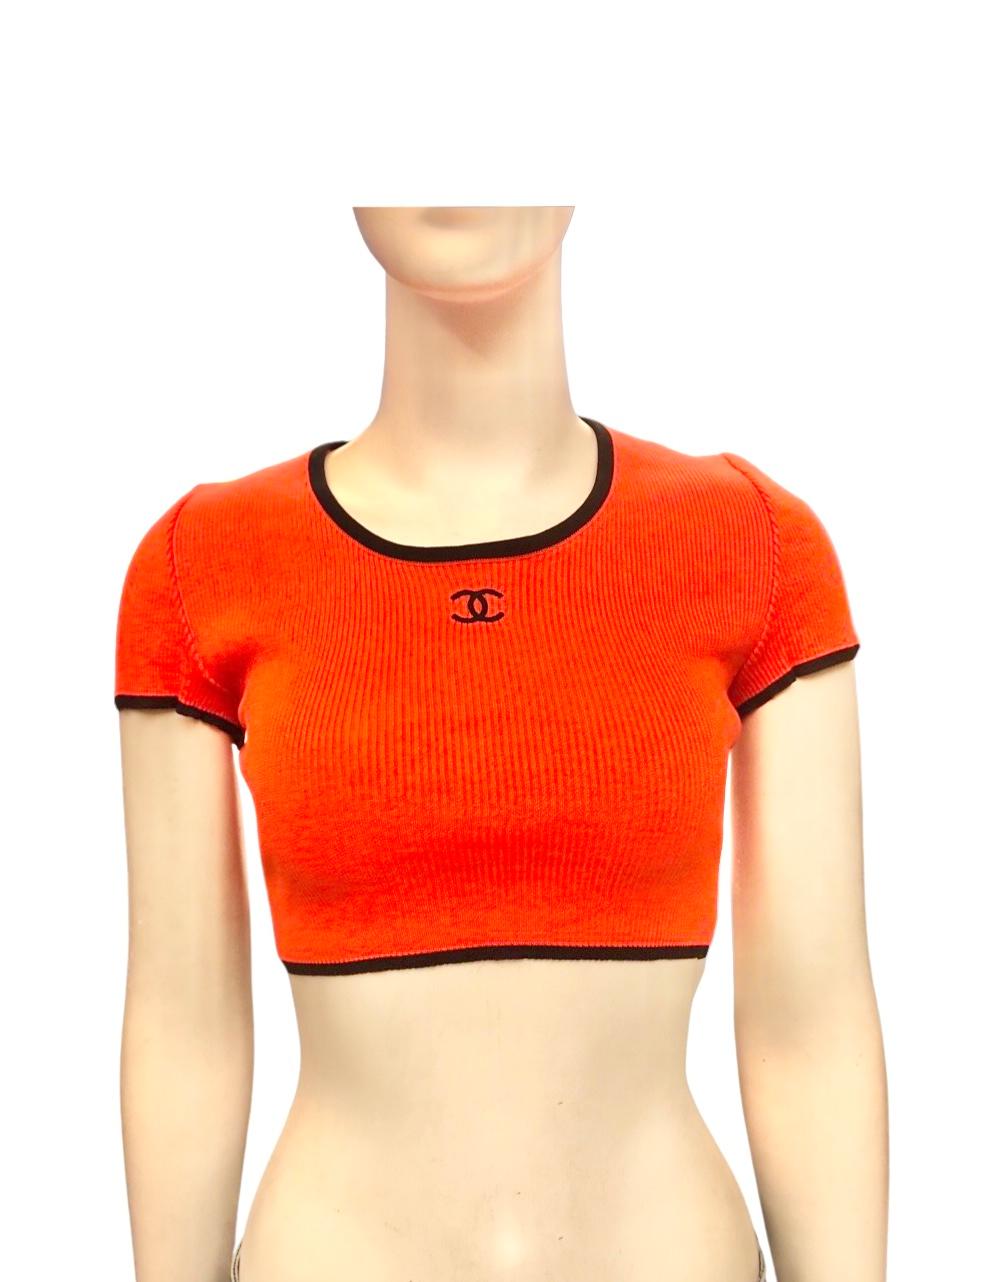 Chanel Orange cotton "CC" Cropped Top 